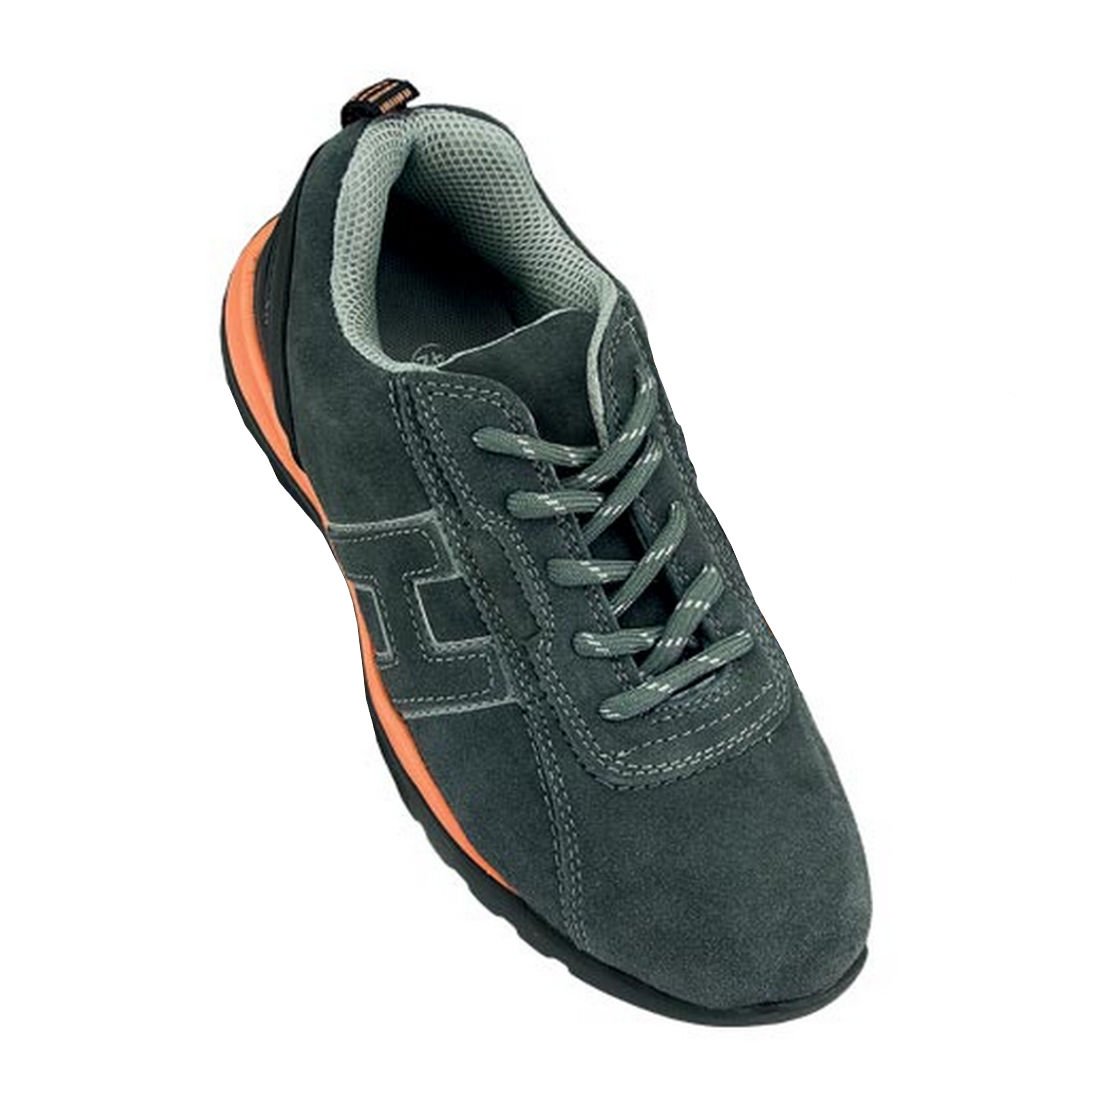 Reis Brneutron37 Sichere Schuhe, Grau-Orange, 37 Größe